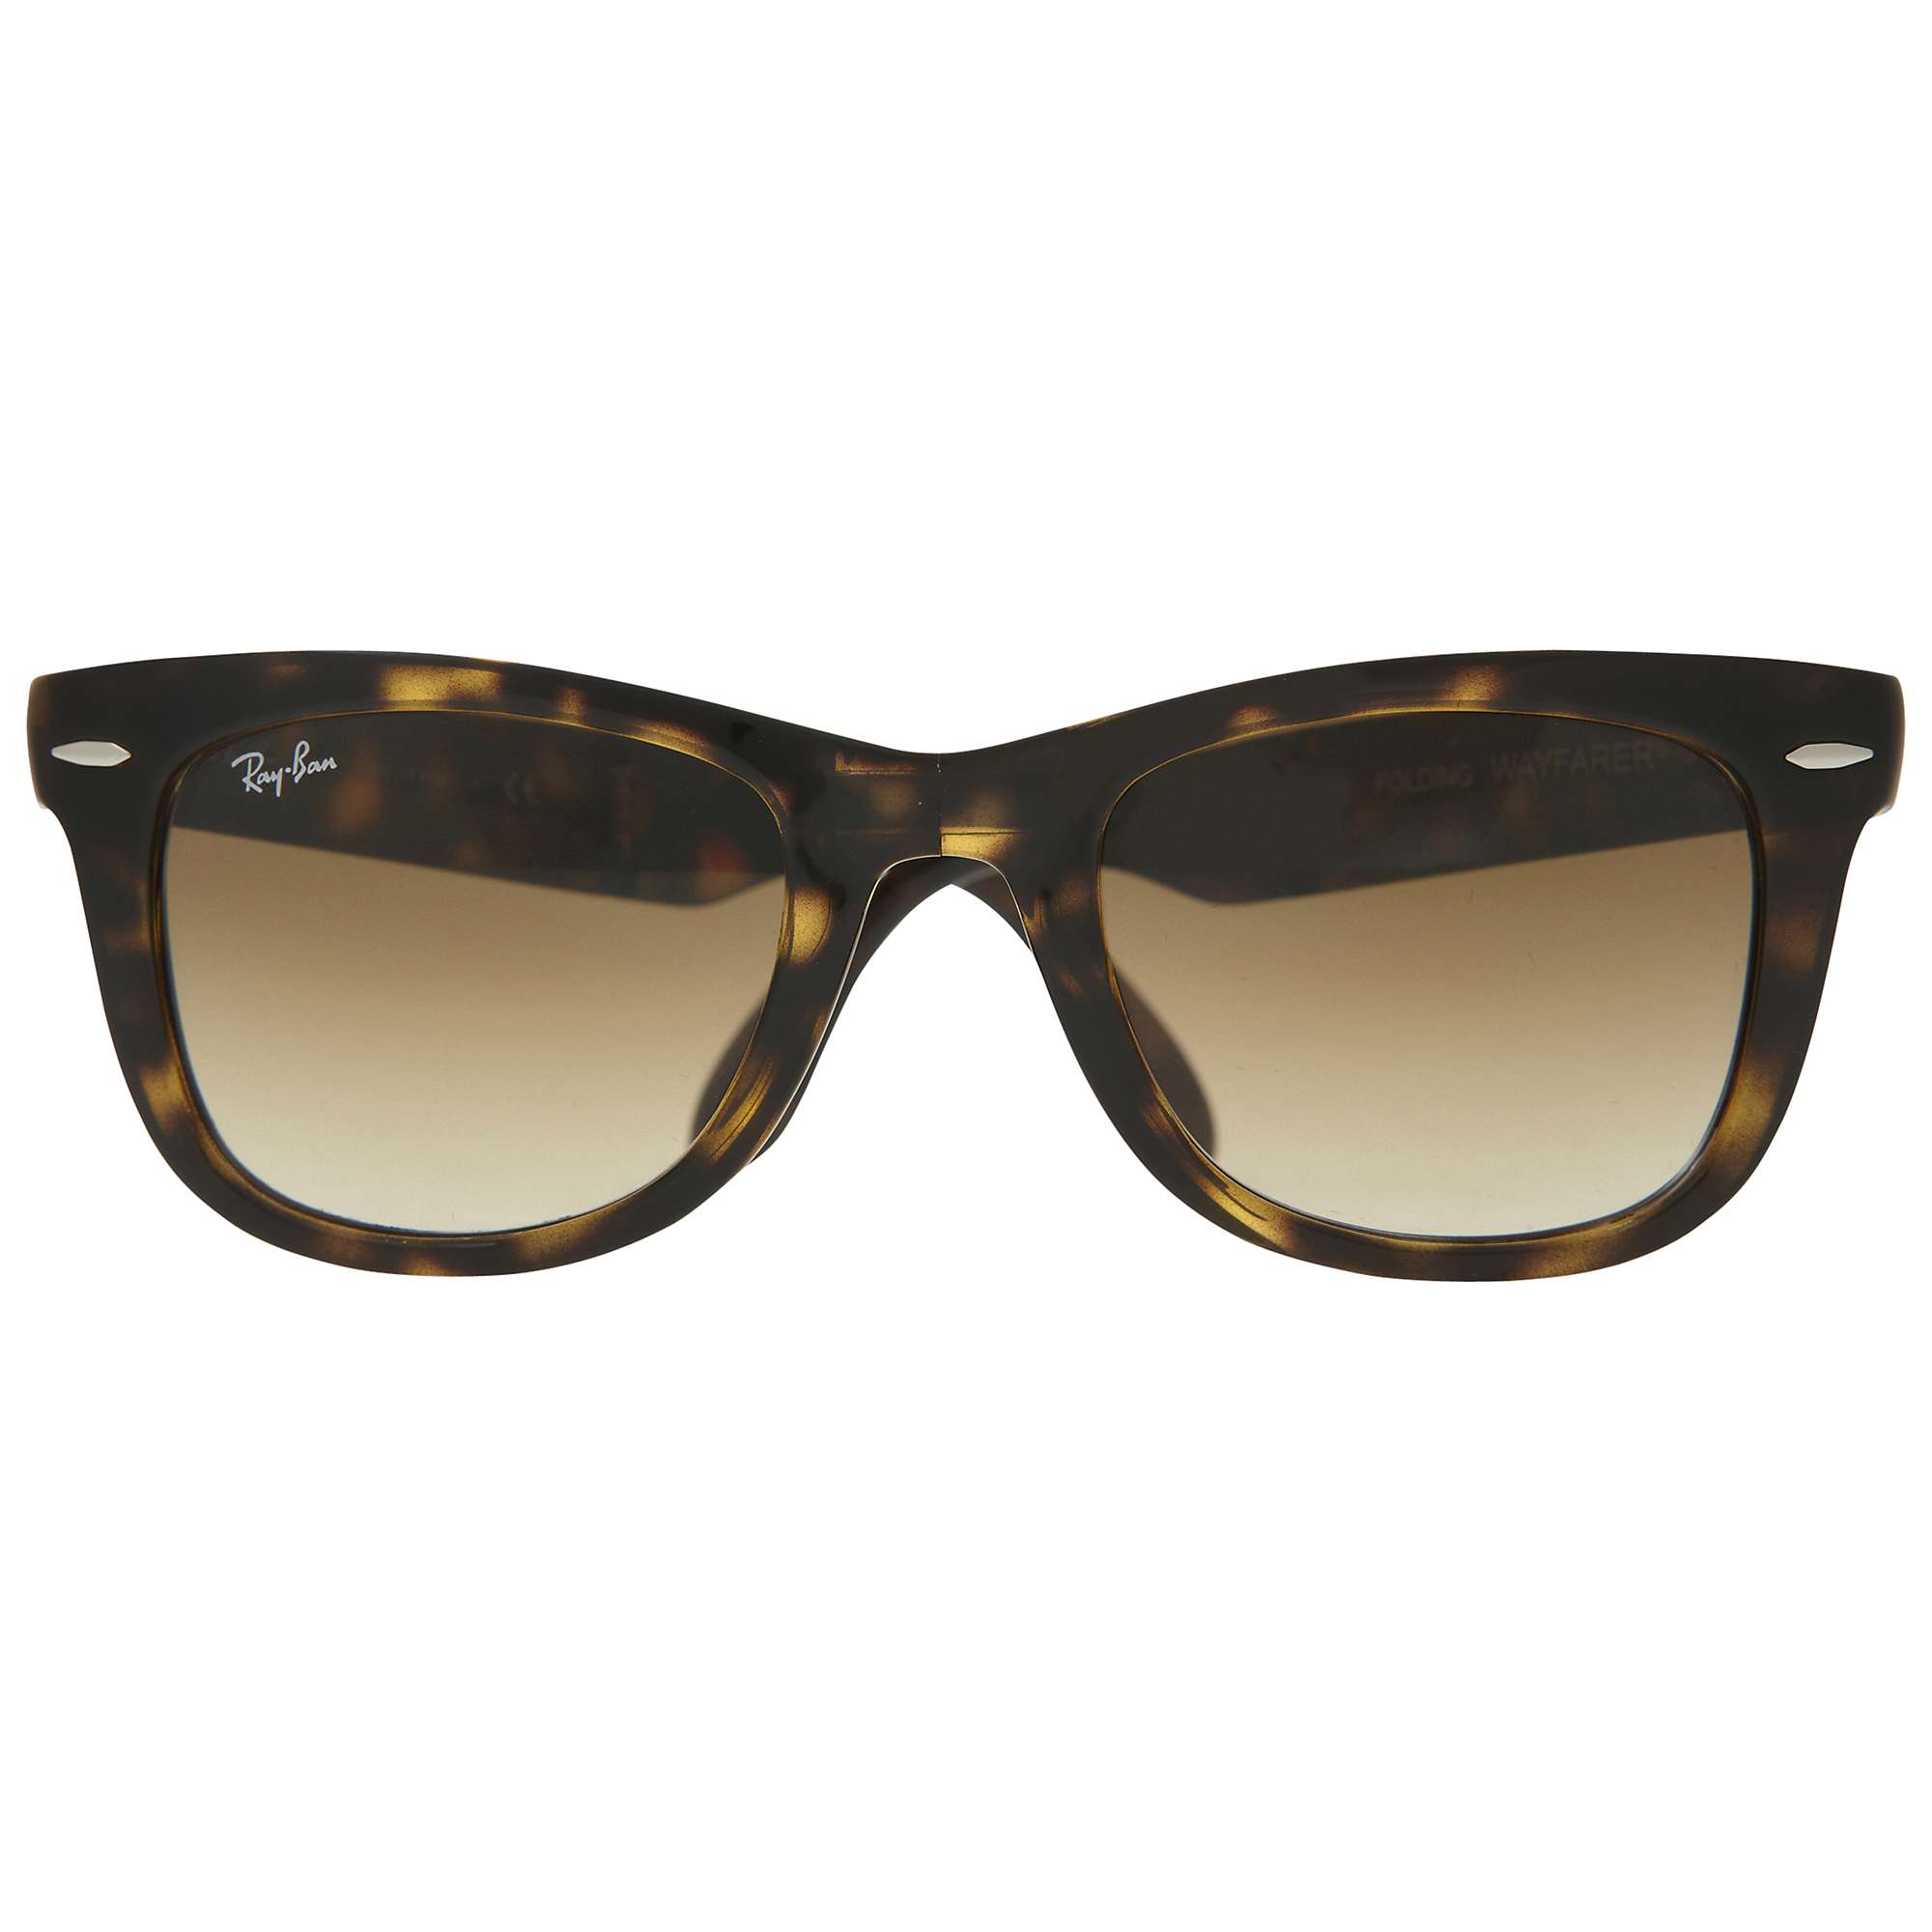 Buy Ray-Ban RB4105 Folding Wayfarer Sunglasses, Light Havana Online at johnlewis.com